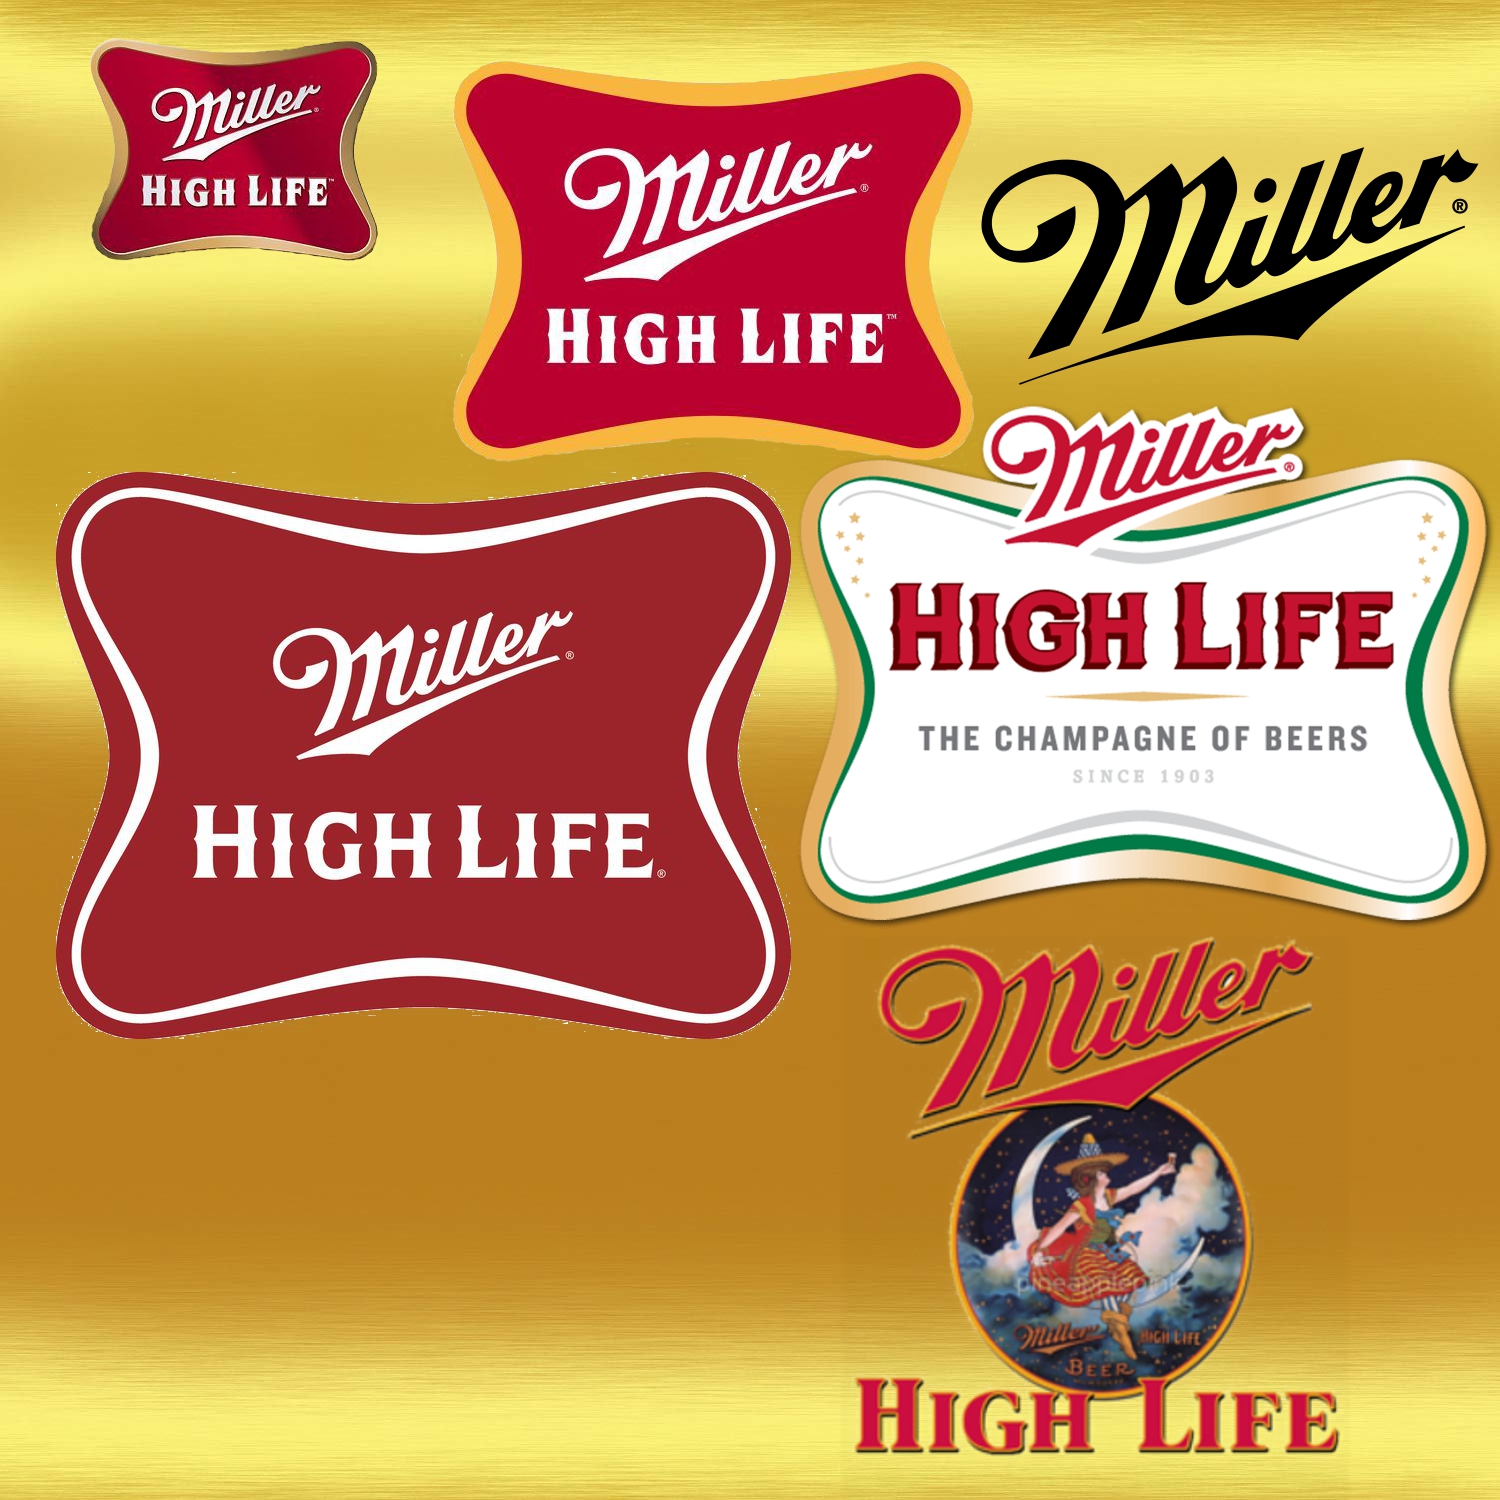 Miller High Life logos.jpg